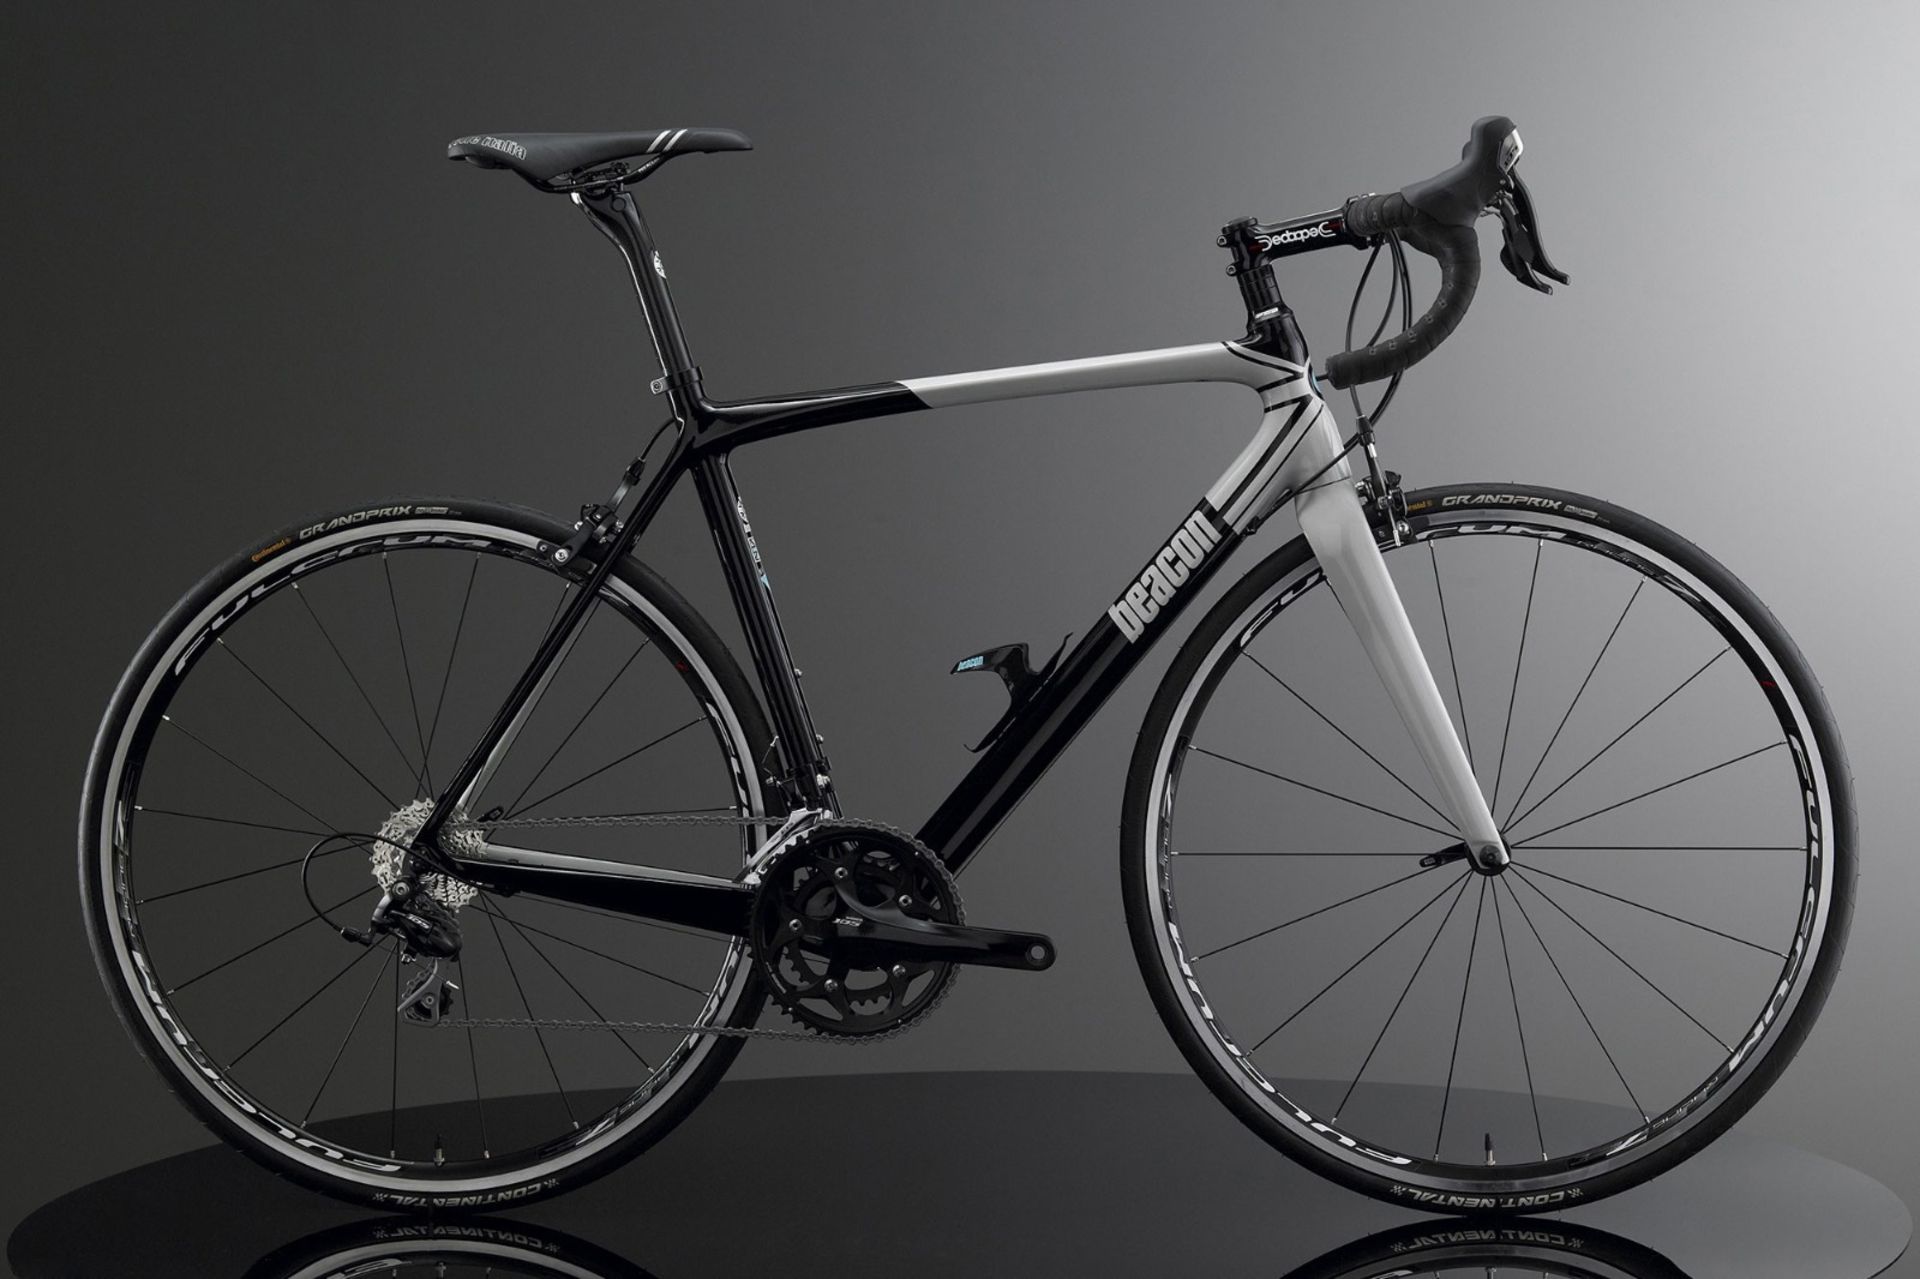 1 x Beacon Model BF-70, Size 520, Carbon Fibre Bike Frame in Black & Light Grey. - Image 2 of 3